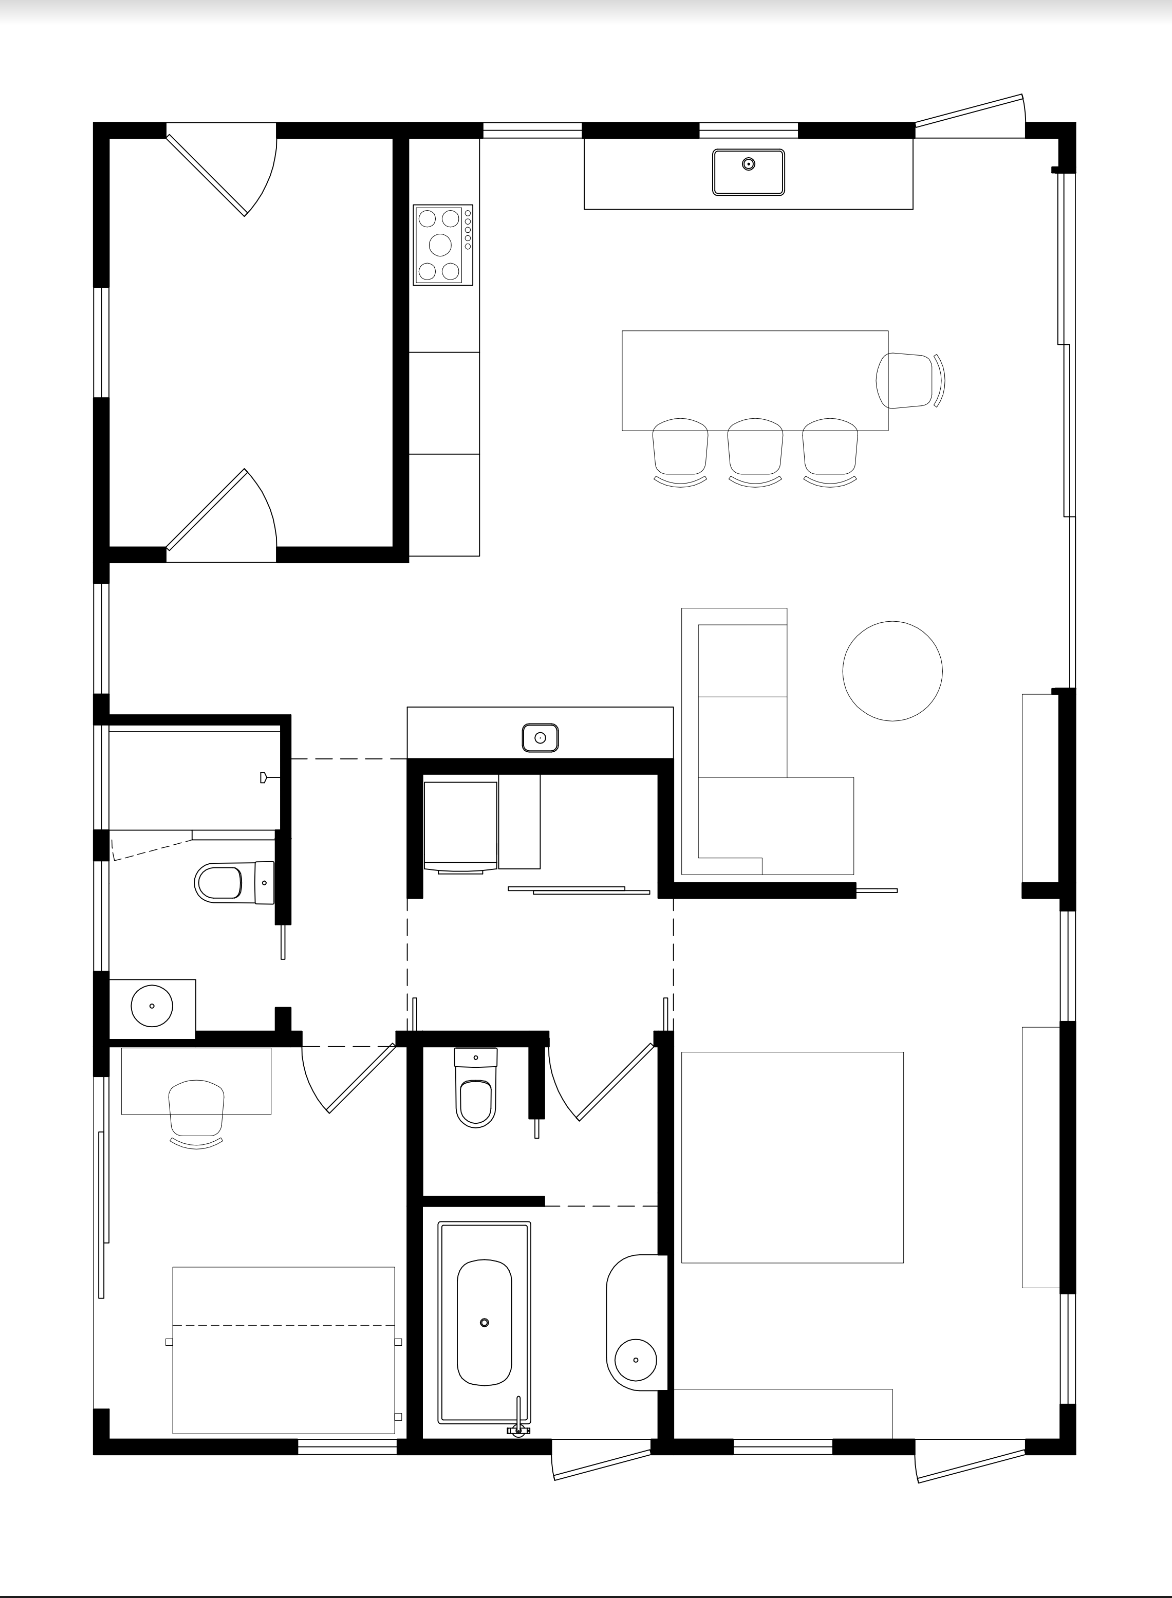 Floorplan for local craftsman design house